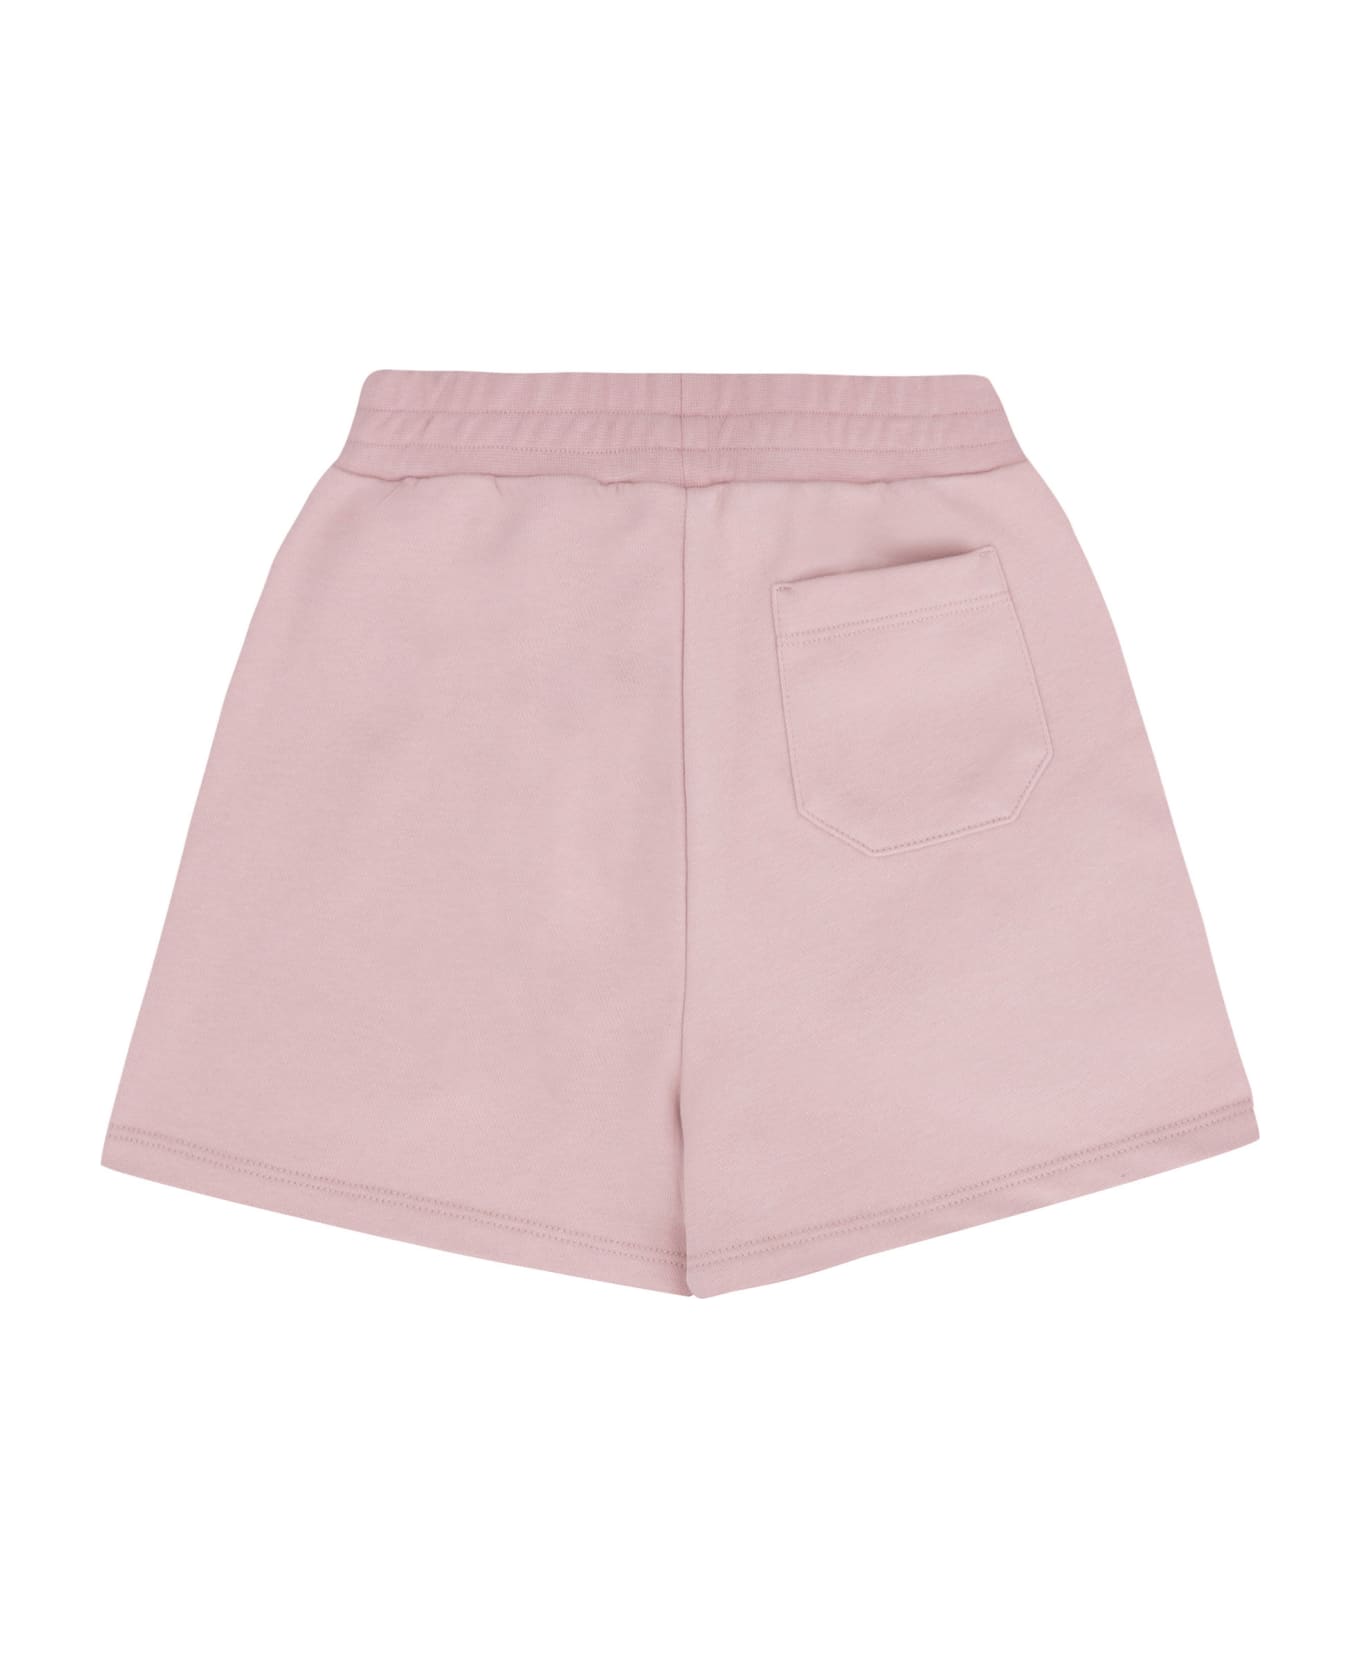 Golden Goose Cotton Shorts - Pink